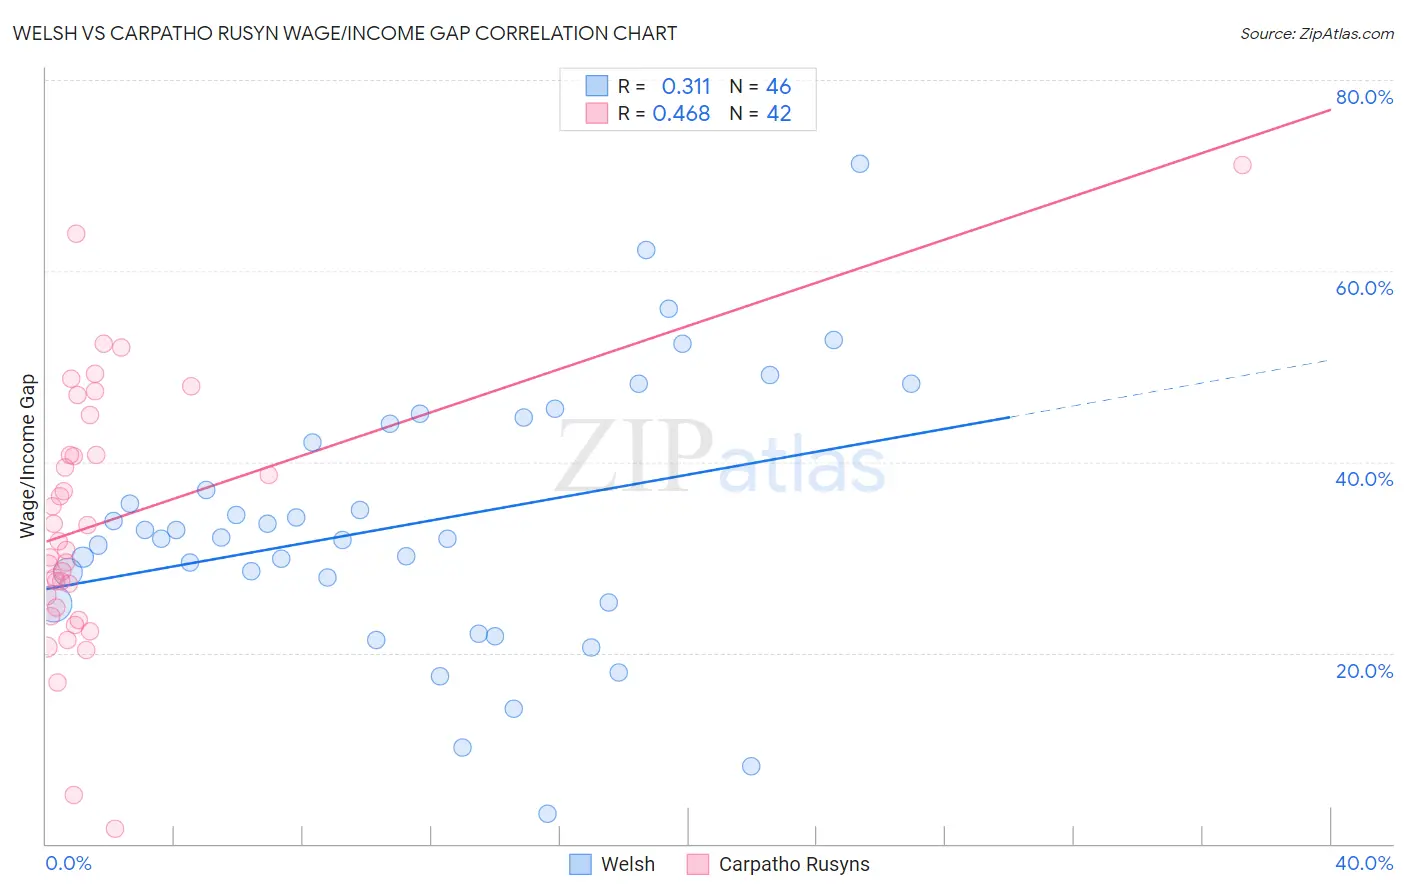 Welsh vs Carpatho Rusyn Wage/Income Gap